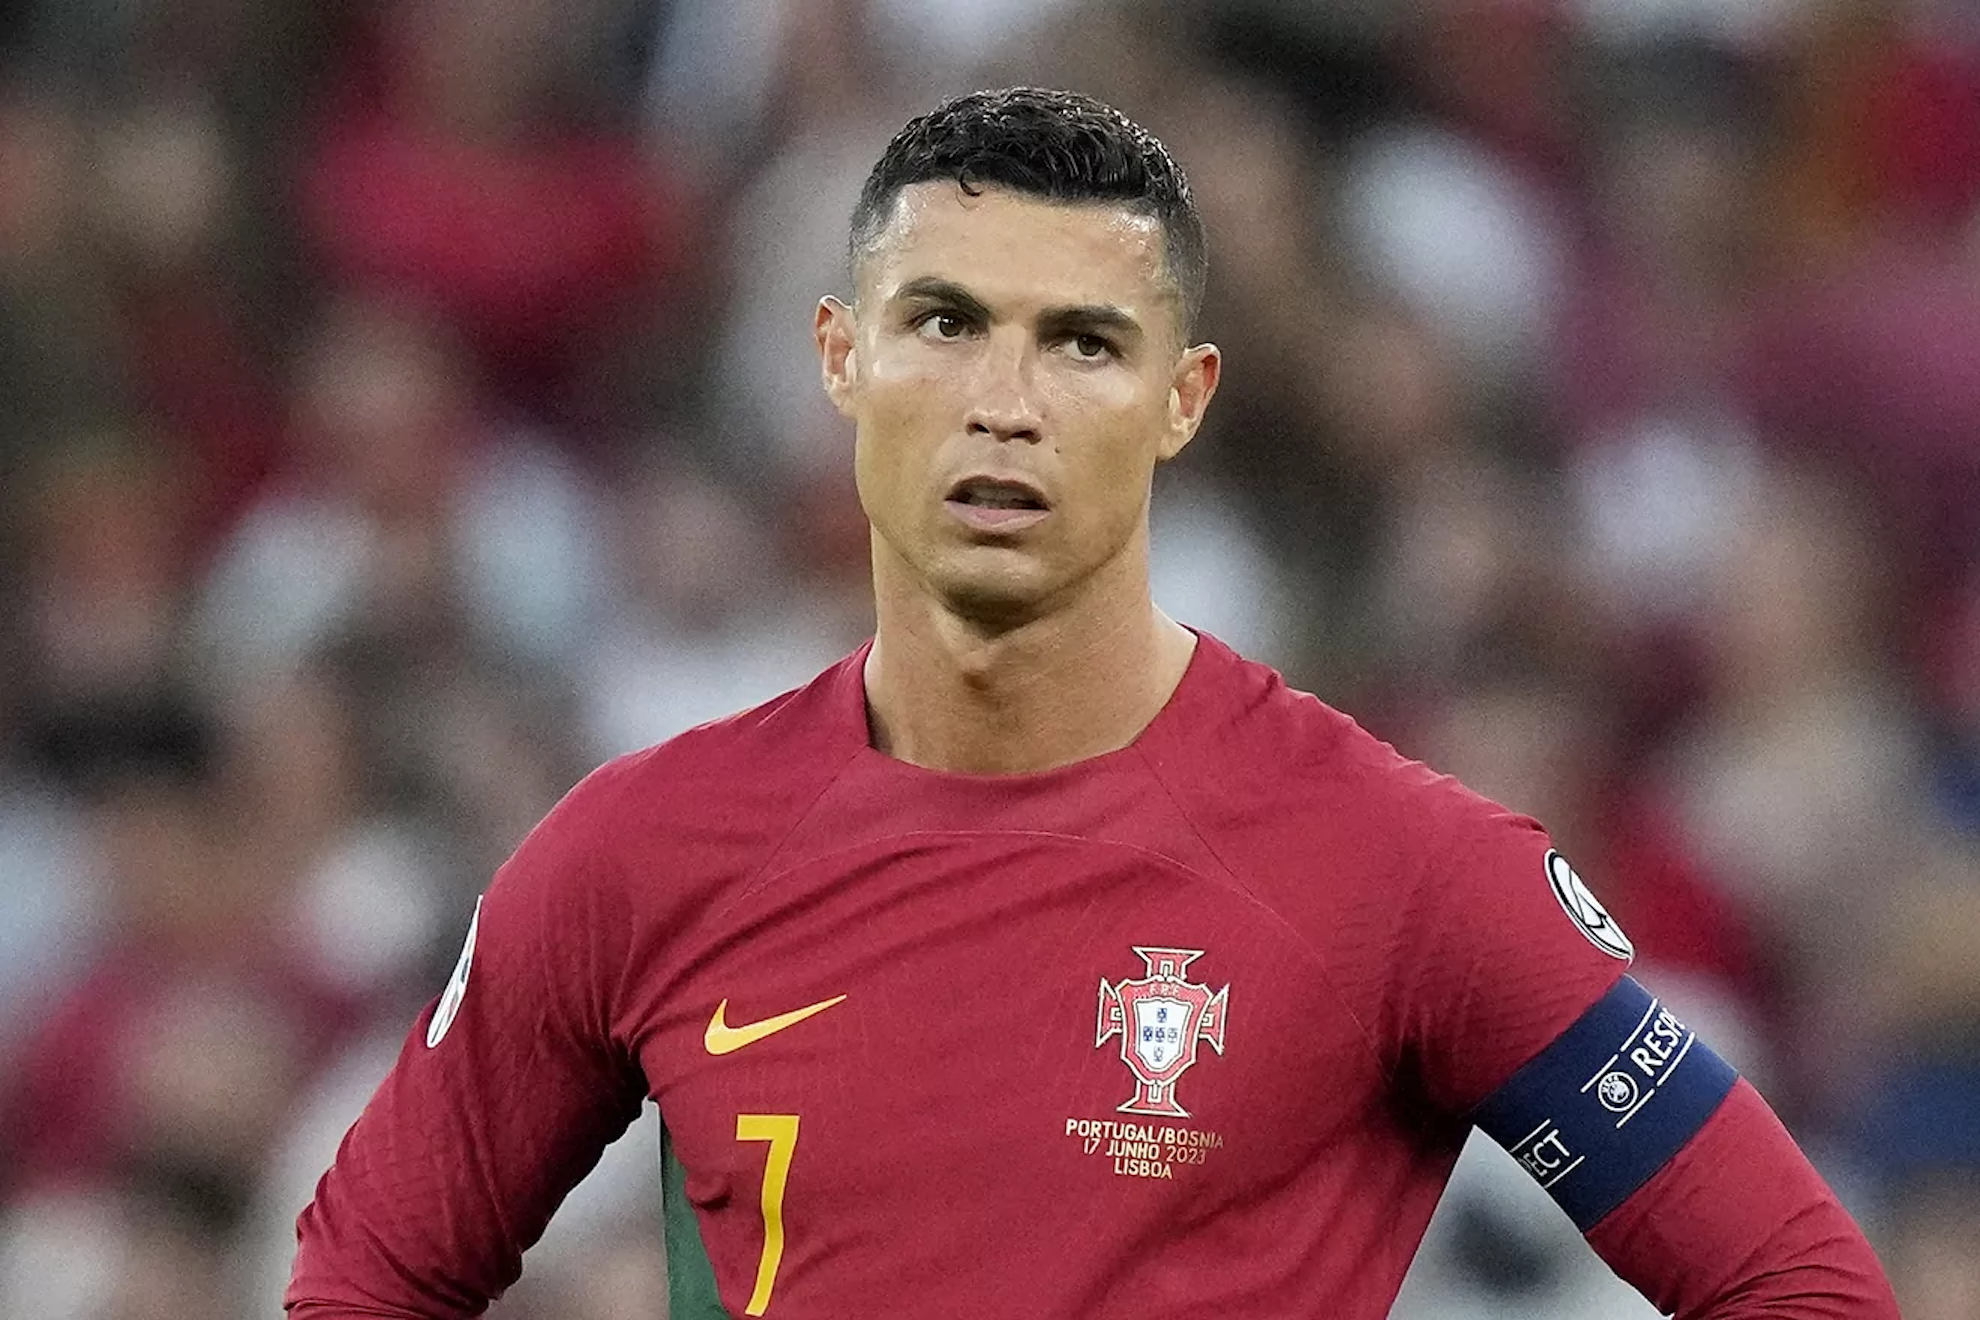 Cristiano Ronaldo playing for Portugal